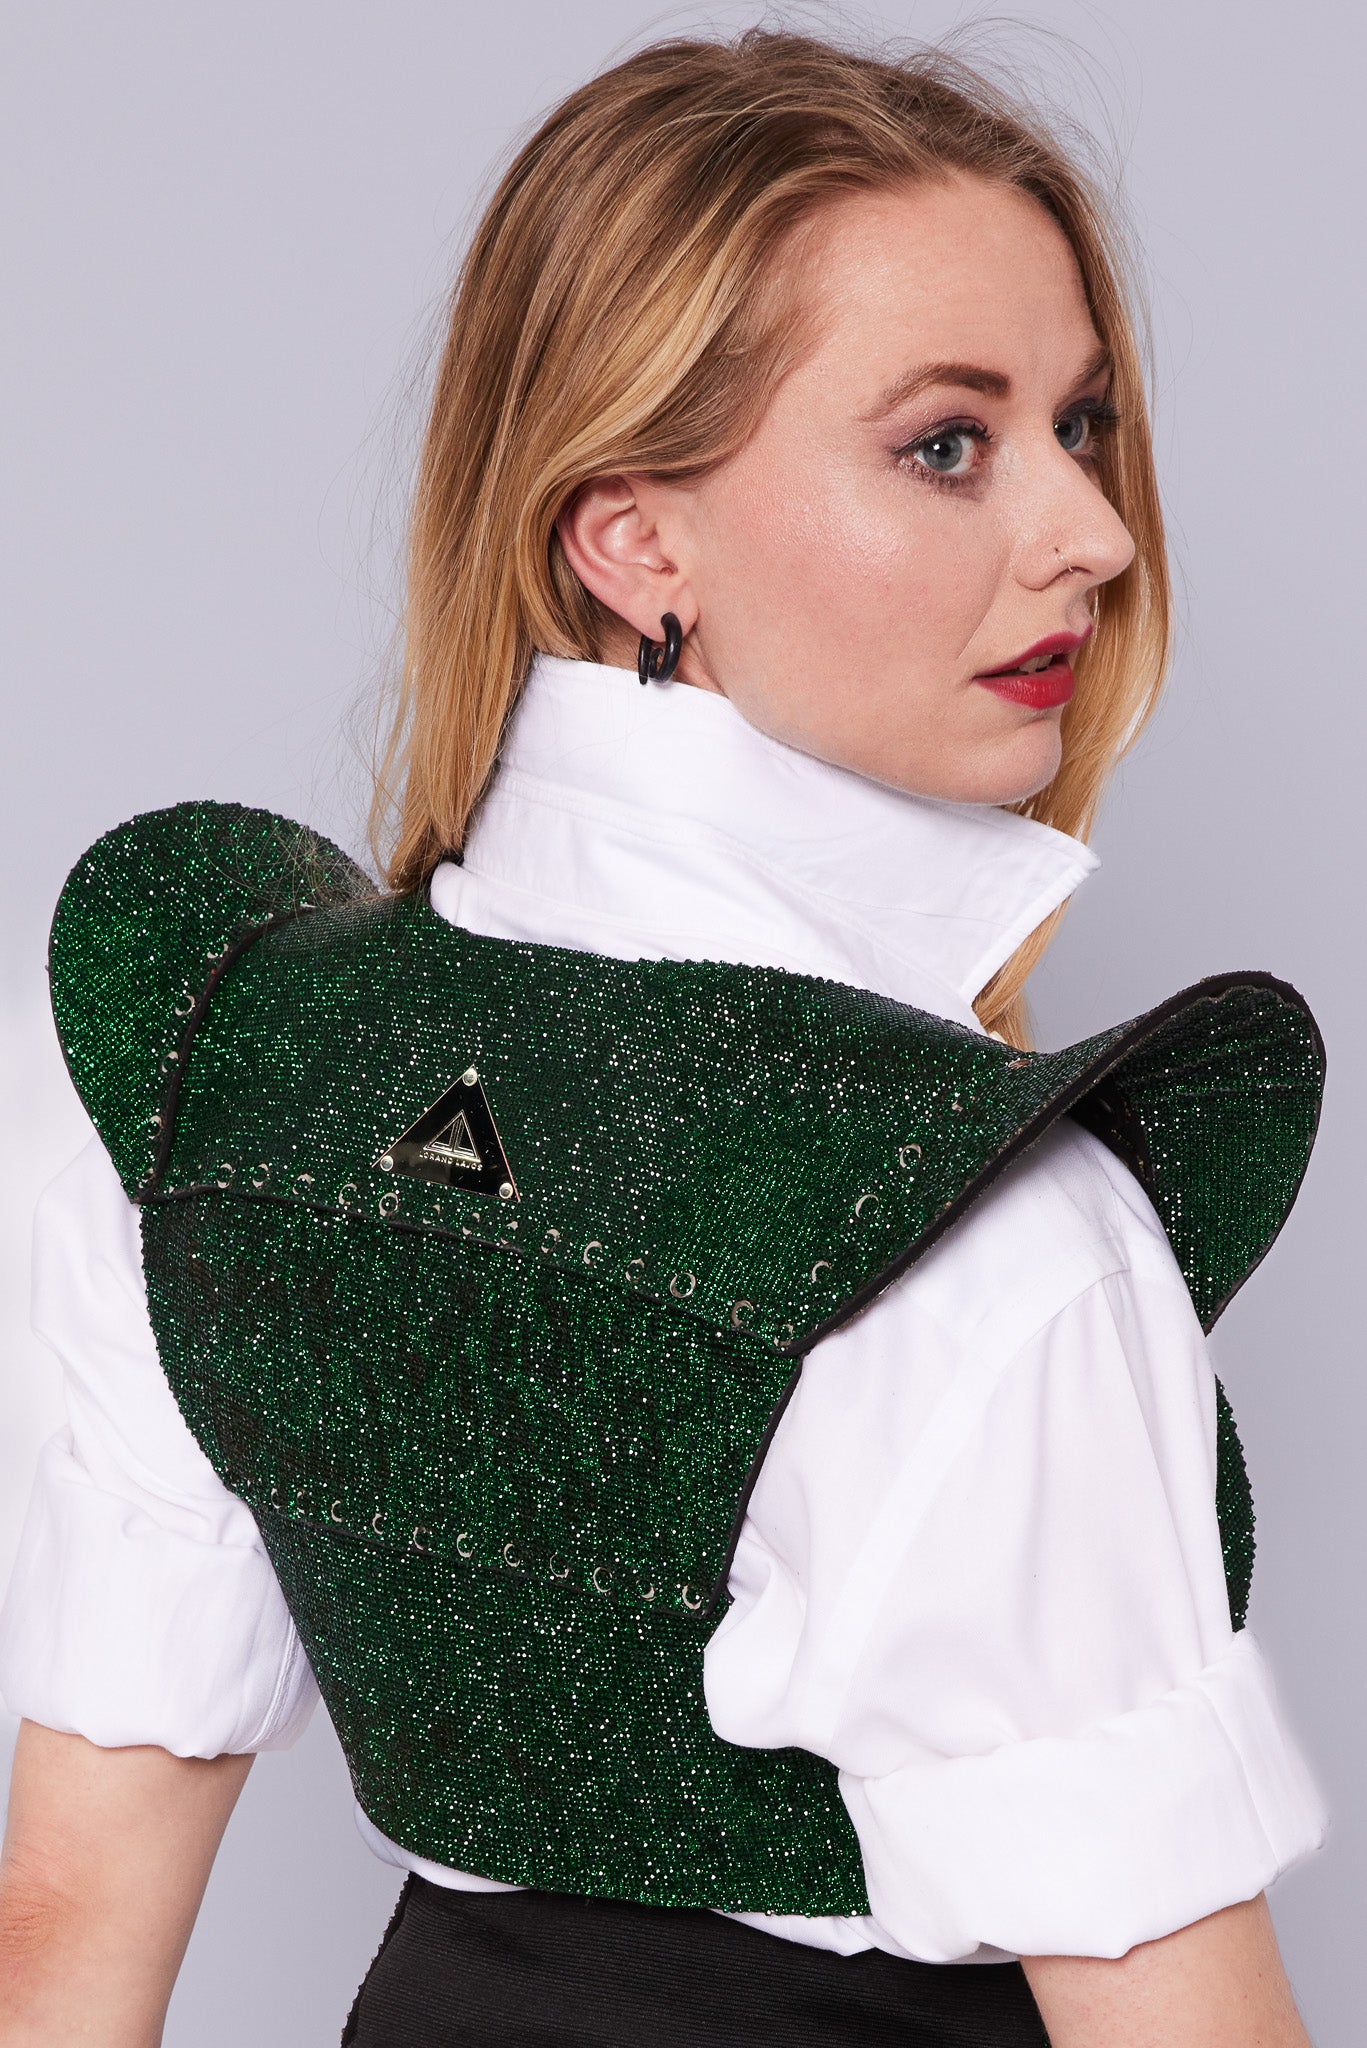 Elegant PAGODA Jacket showcasing a cropped design and eye-catching emerald green crystal fabric